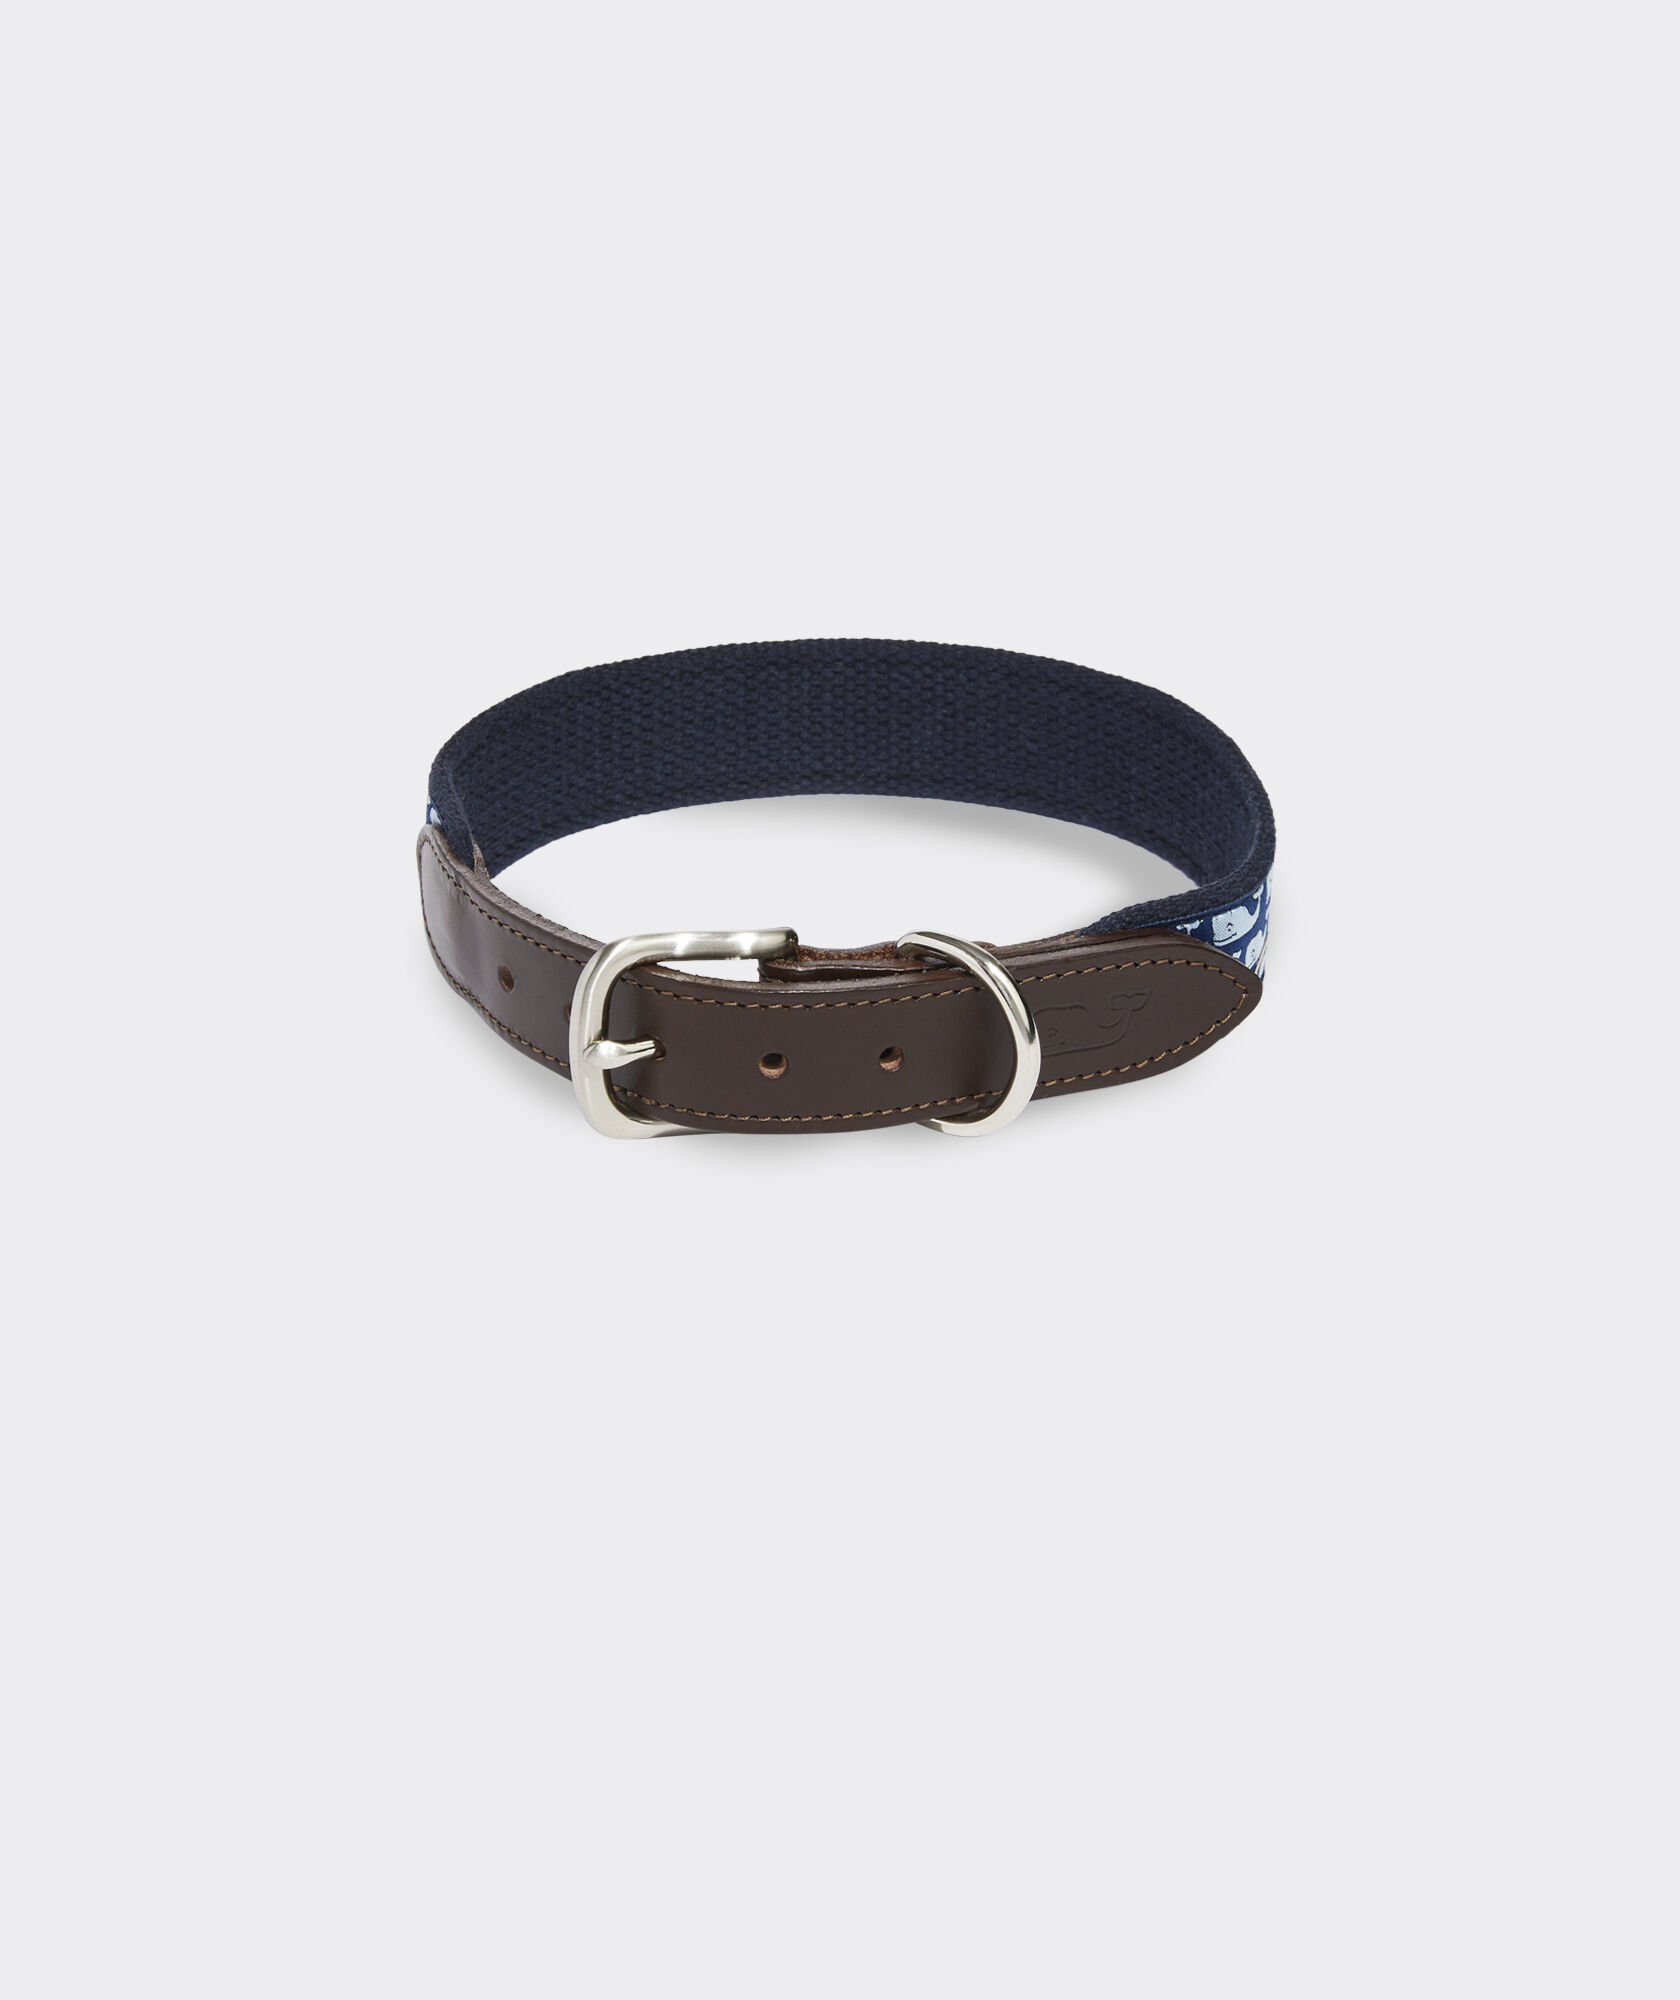 Vineyard Whale Leather Canvas Club Dog Collar